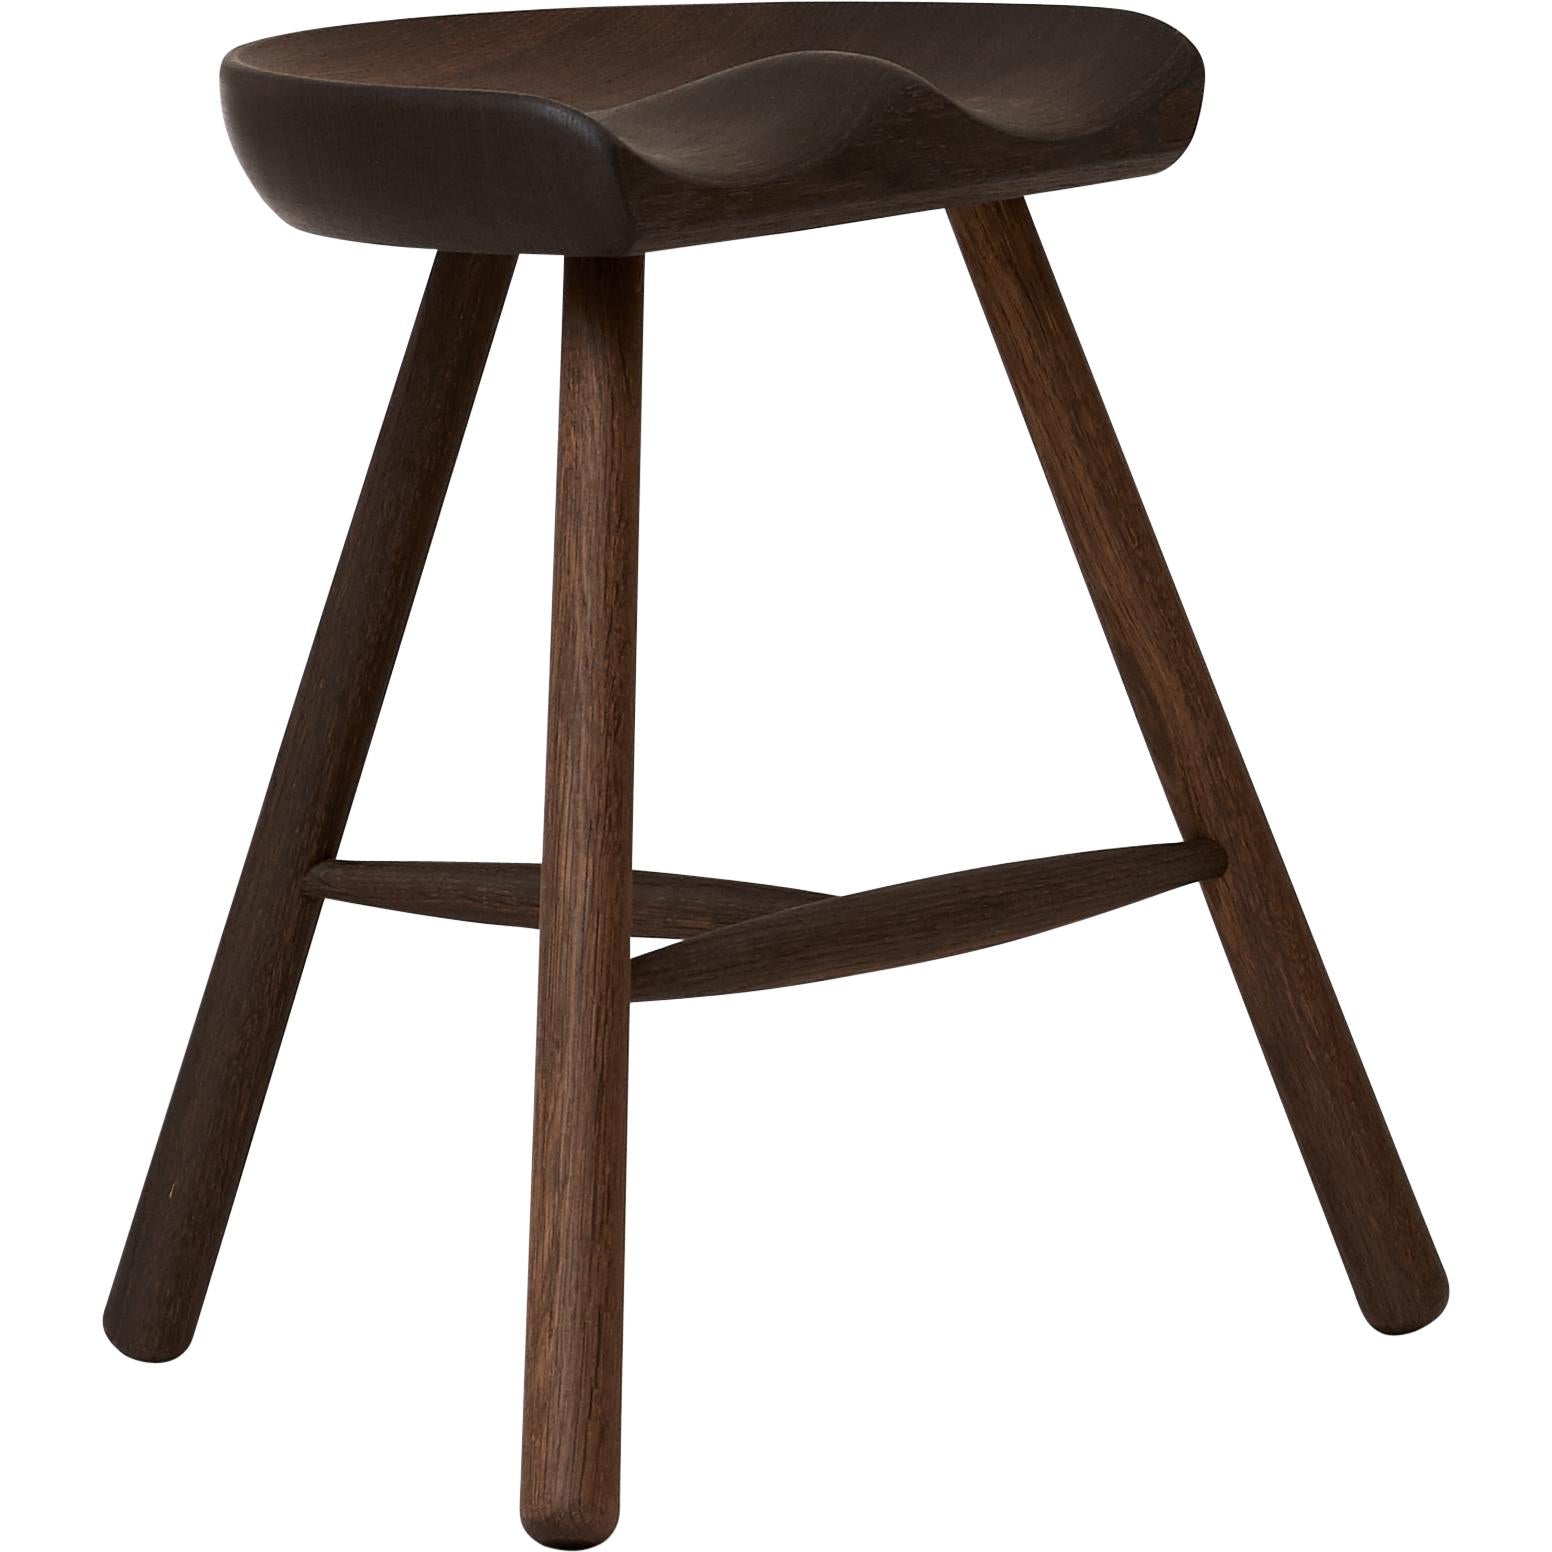 Form & Raffine Shoemaker Chair No. 49. Smoked Oak